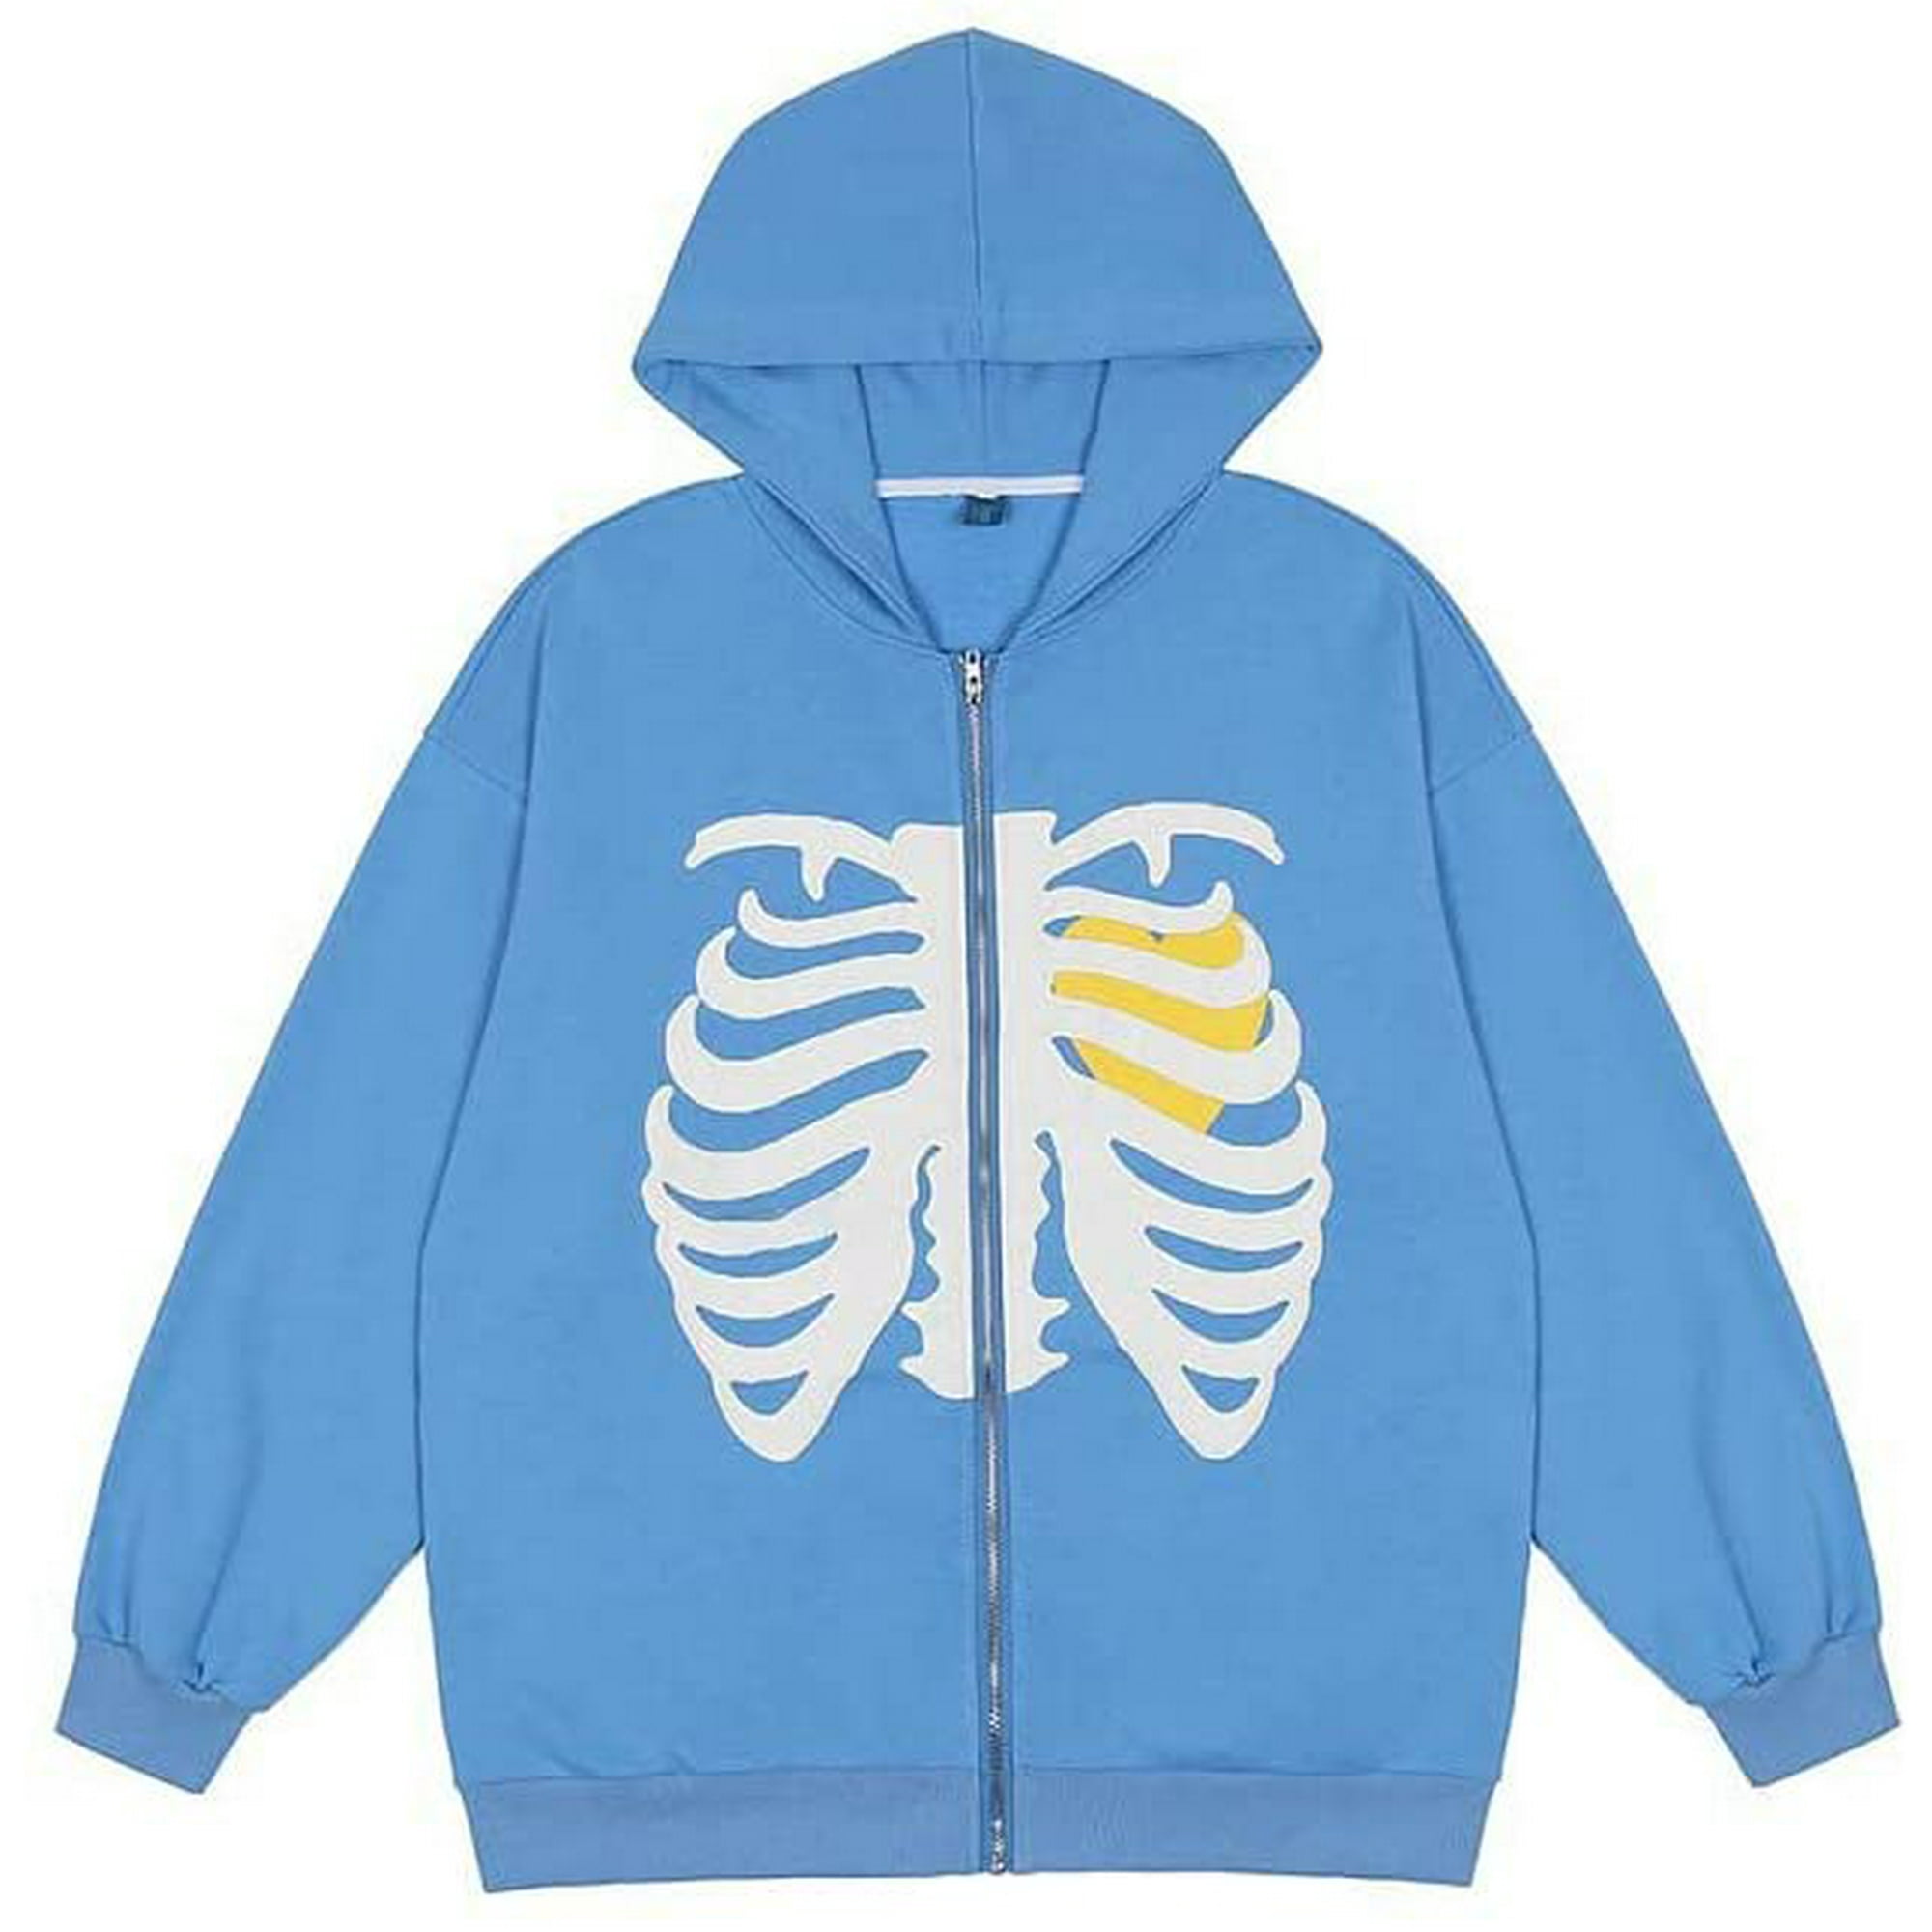 Skeleton Zip Hoodie for Women Men Jacket Black Autumn Spring Sweatshirt | Walmart Canada